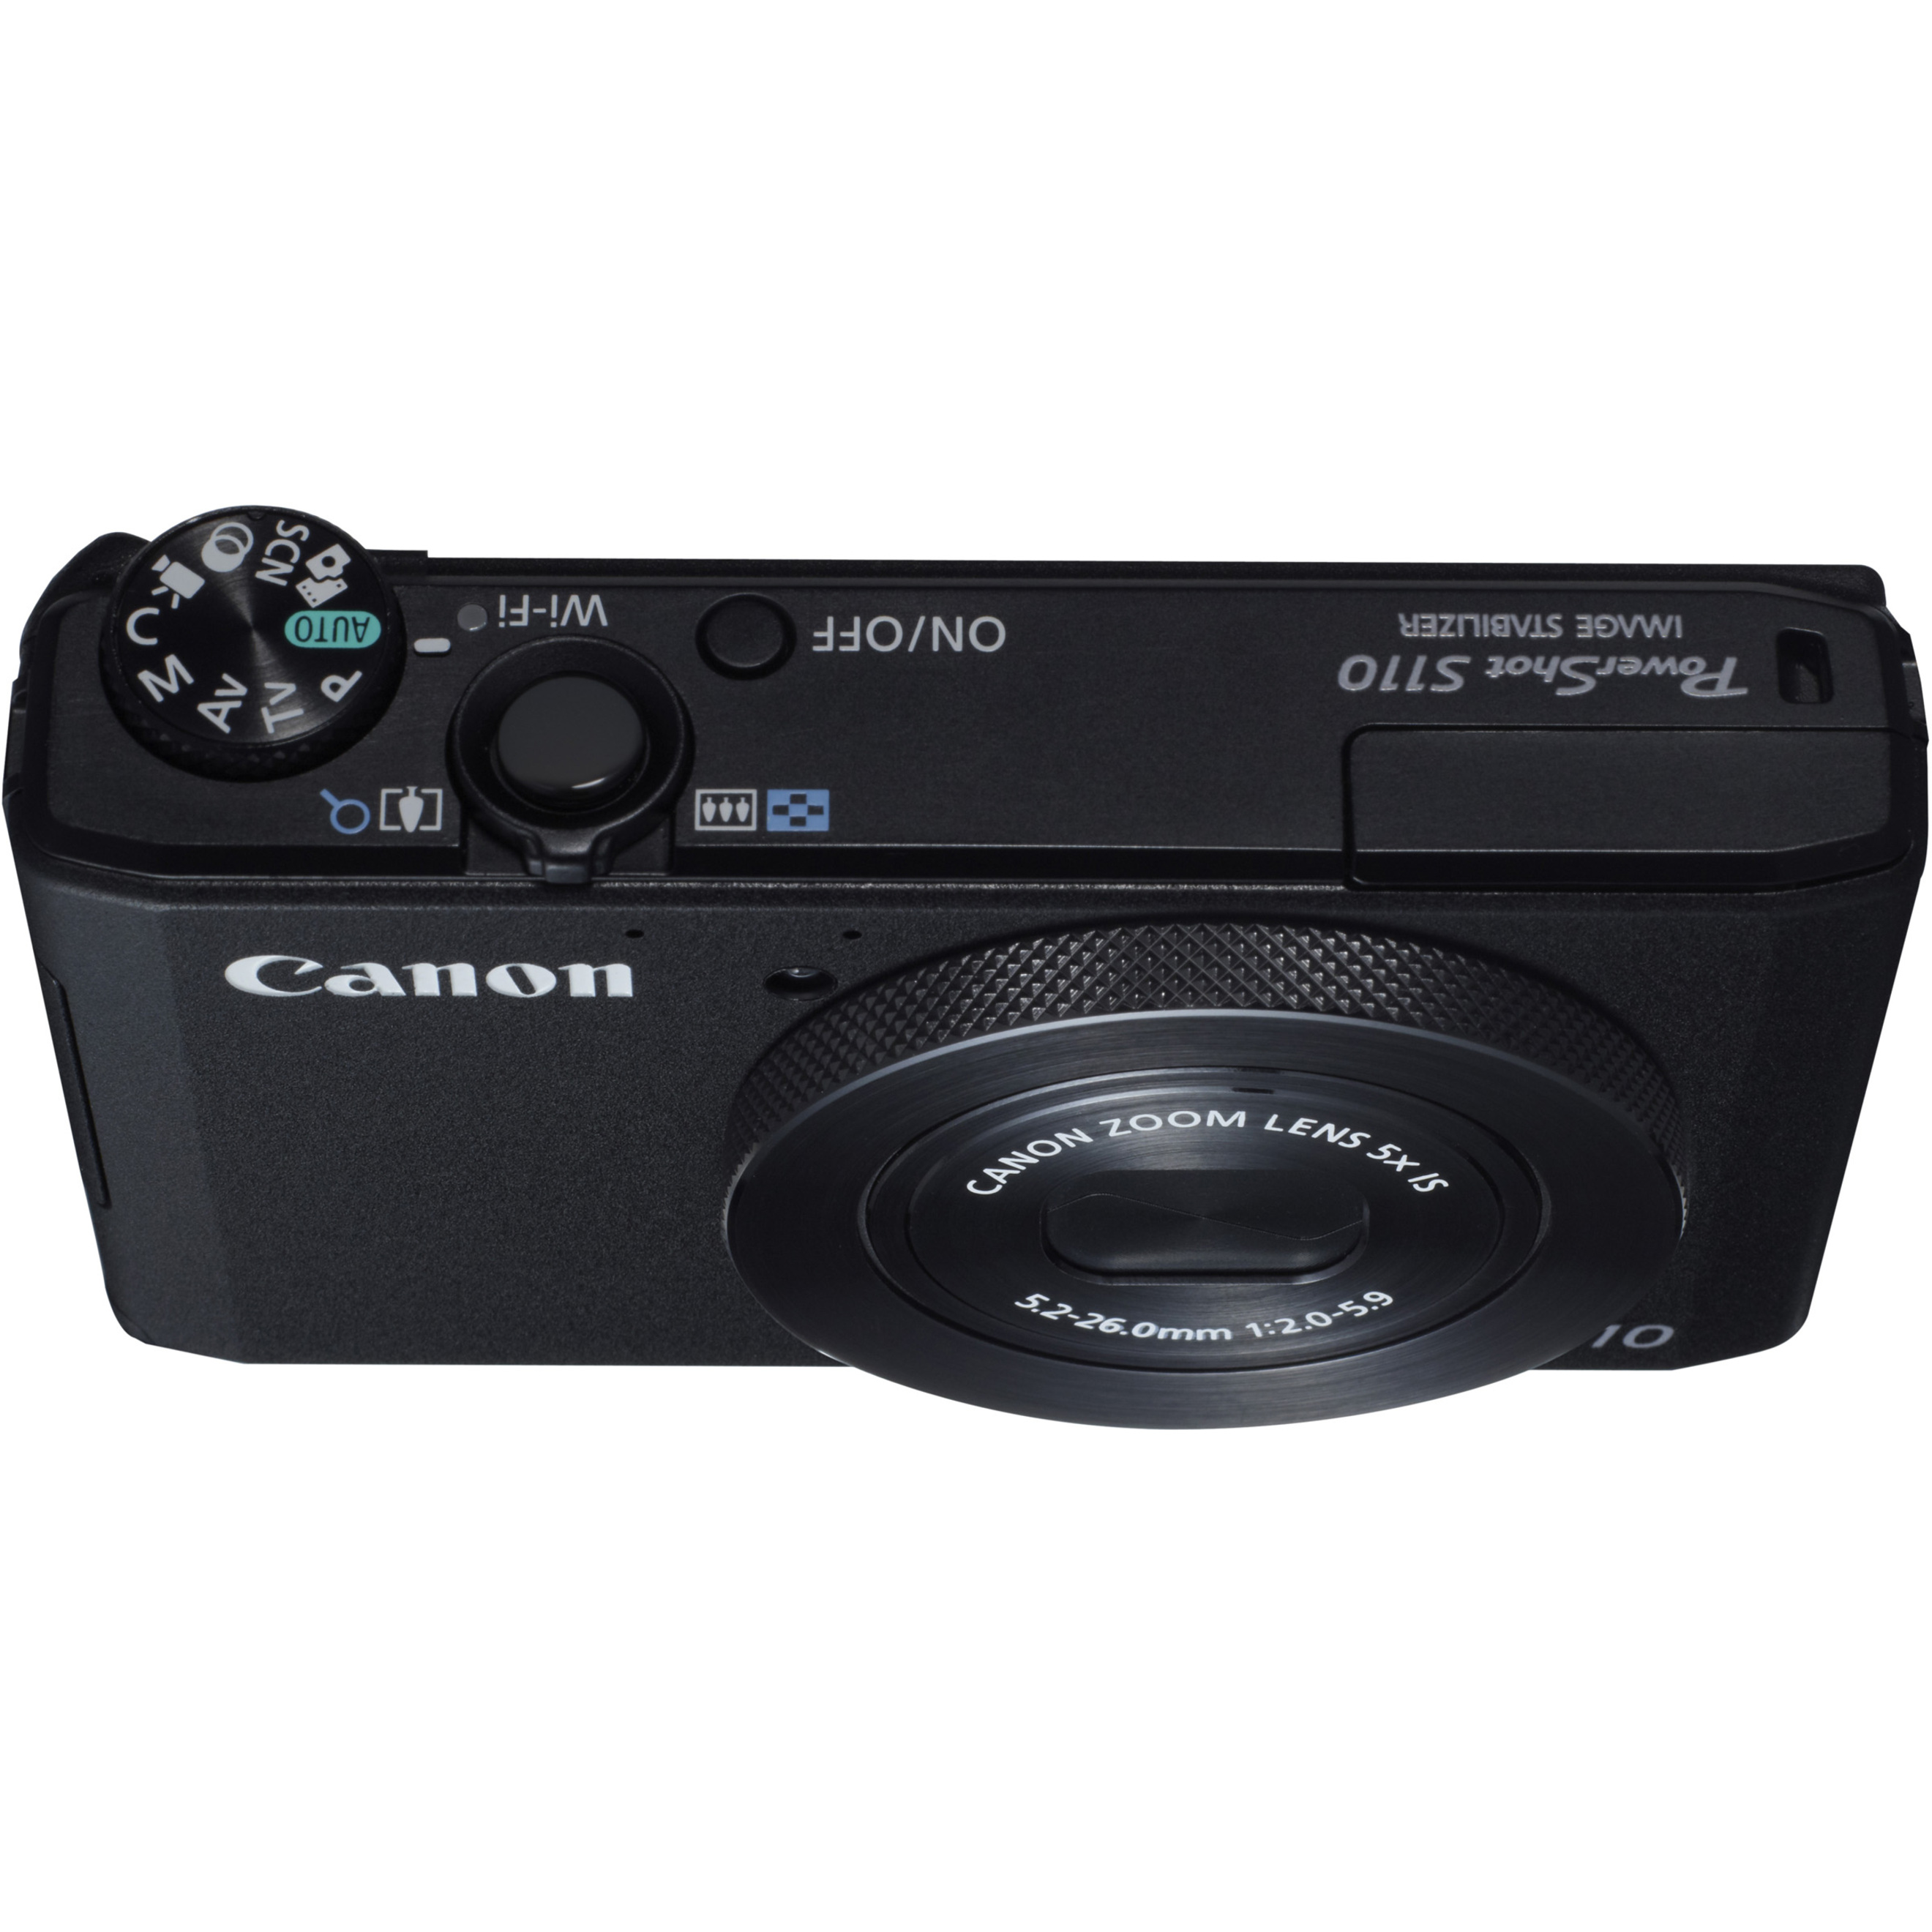 Canon PowerShot S110 12.1 Megapixel Compact Camera, Black - image 5 of 5